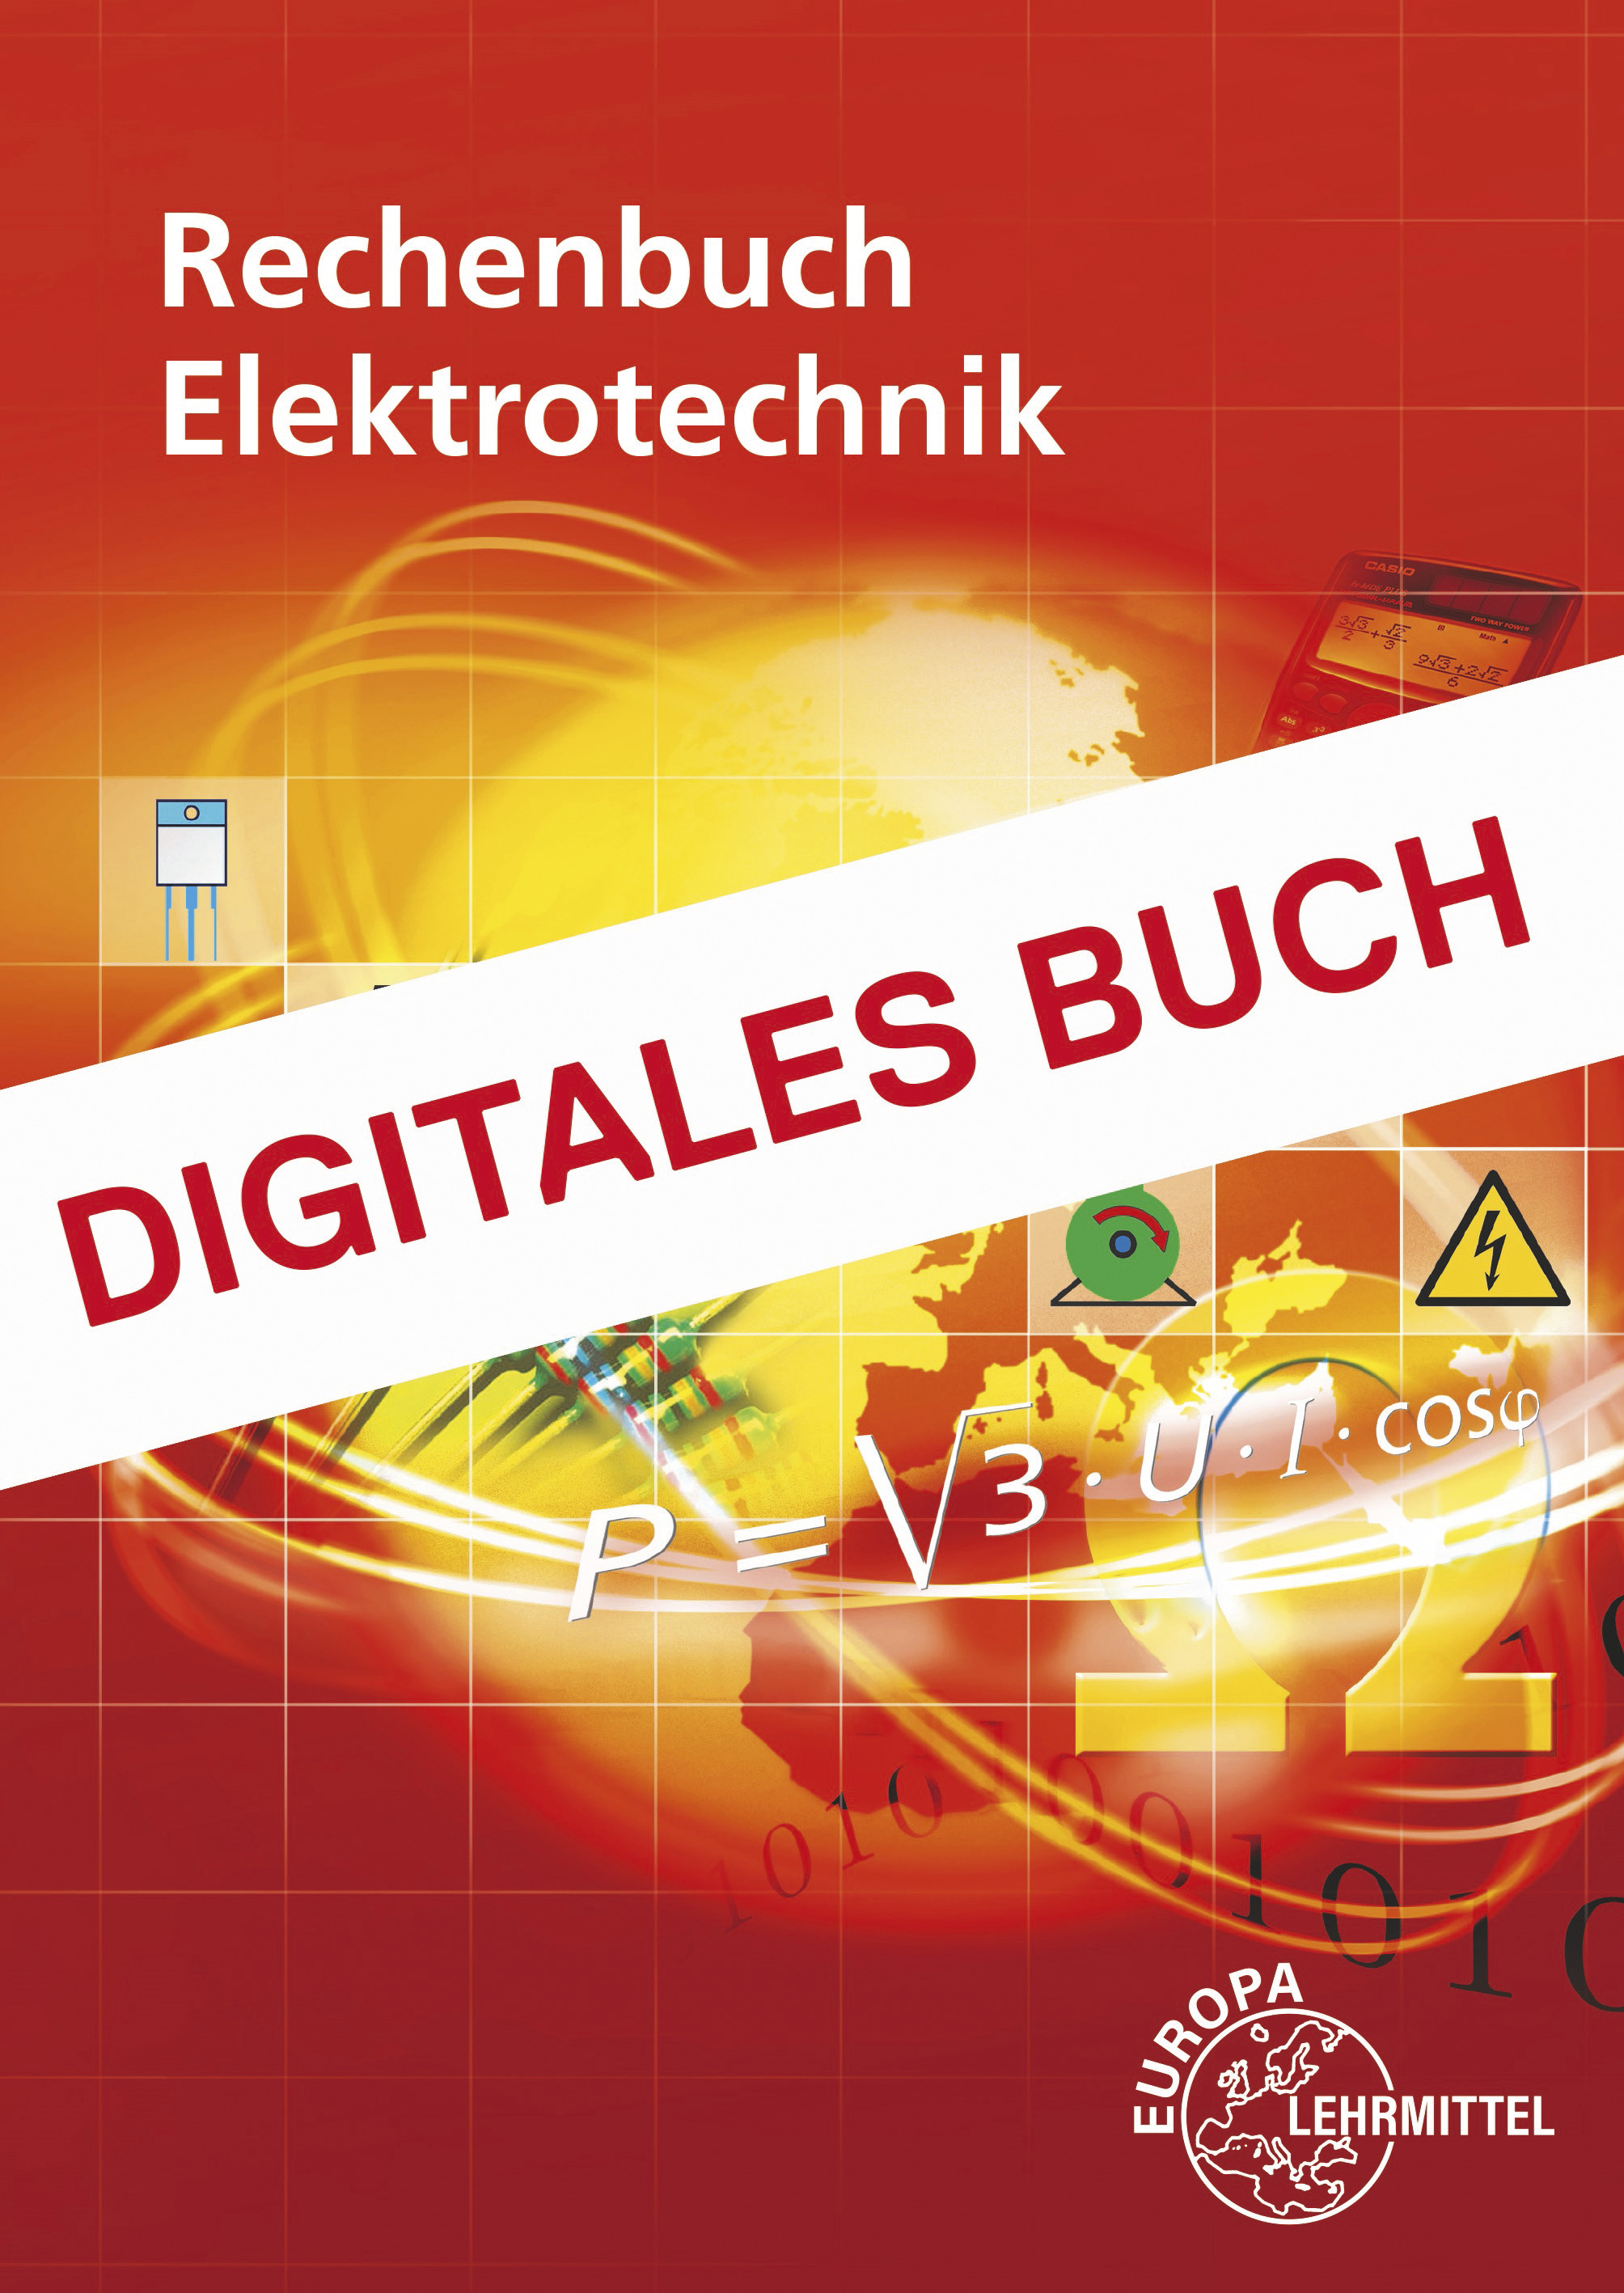 Rechenbuch Elektrotechnik - Digitales Buch